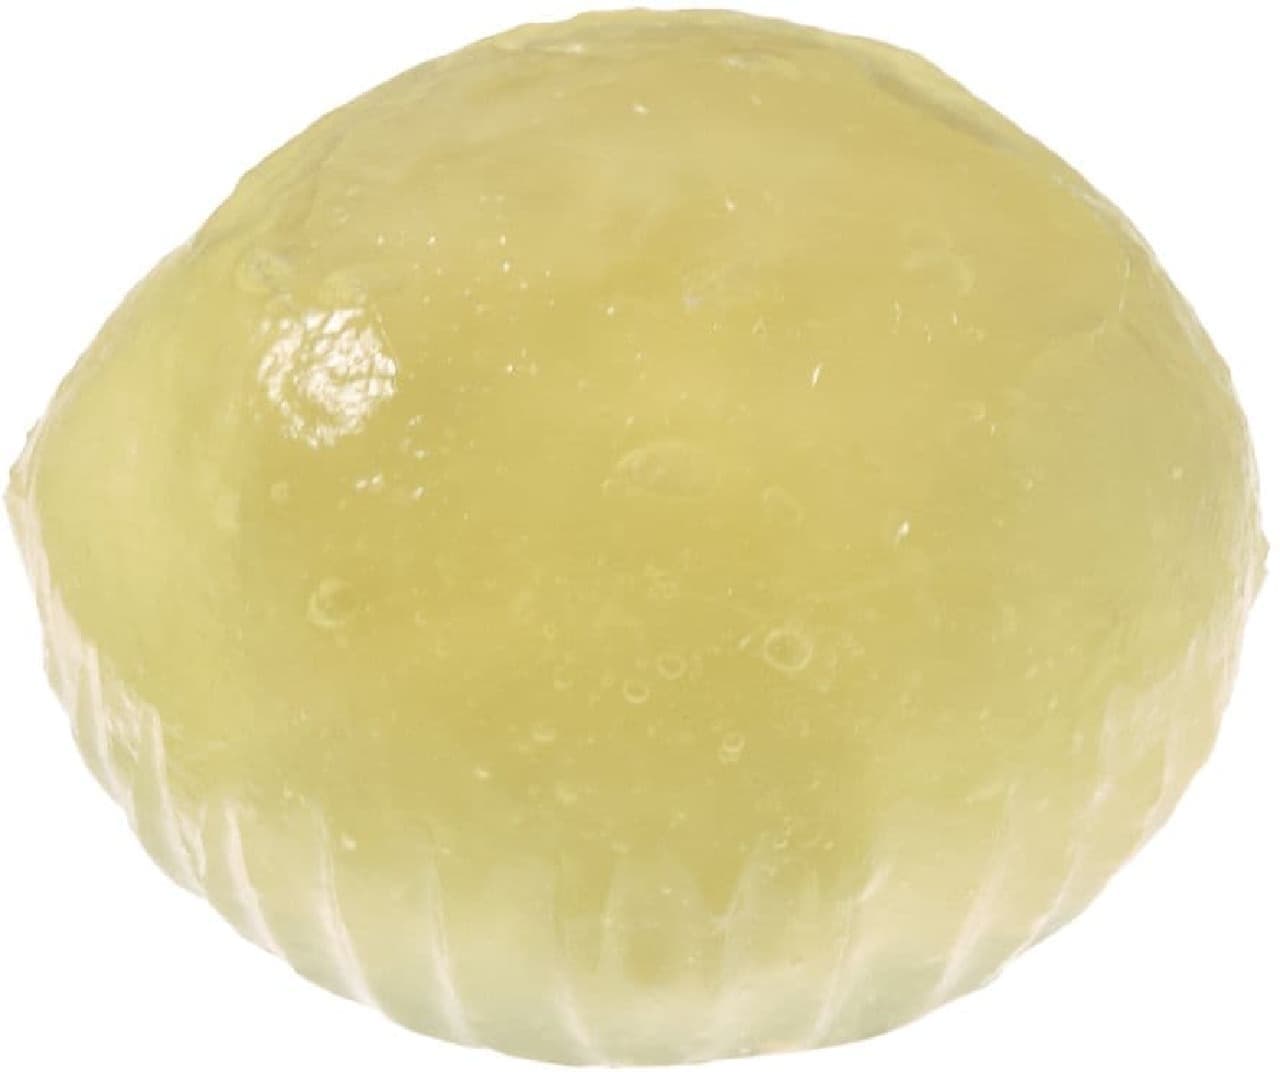 7-ELEVEN "Puru-Puru Texture Kuzu Lemon Kuzu Lemon Setouchi Lemon Use